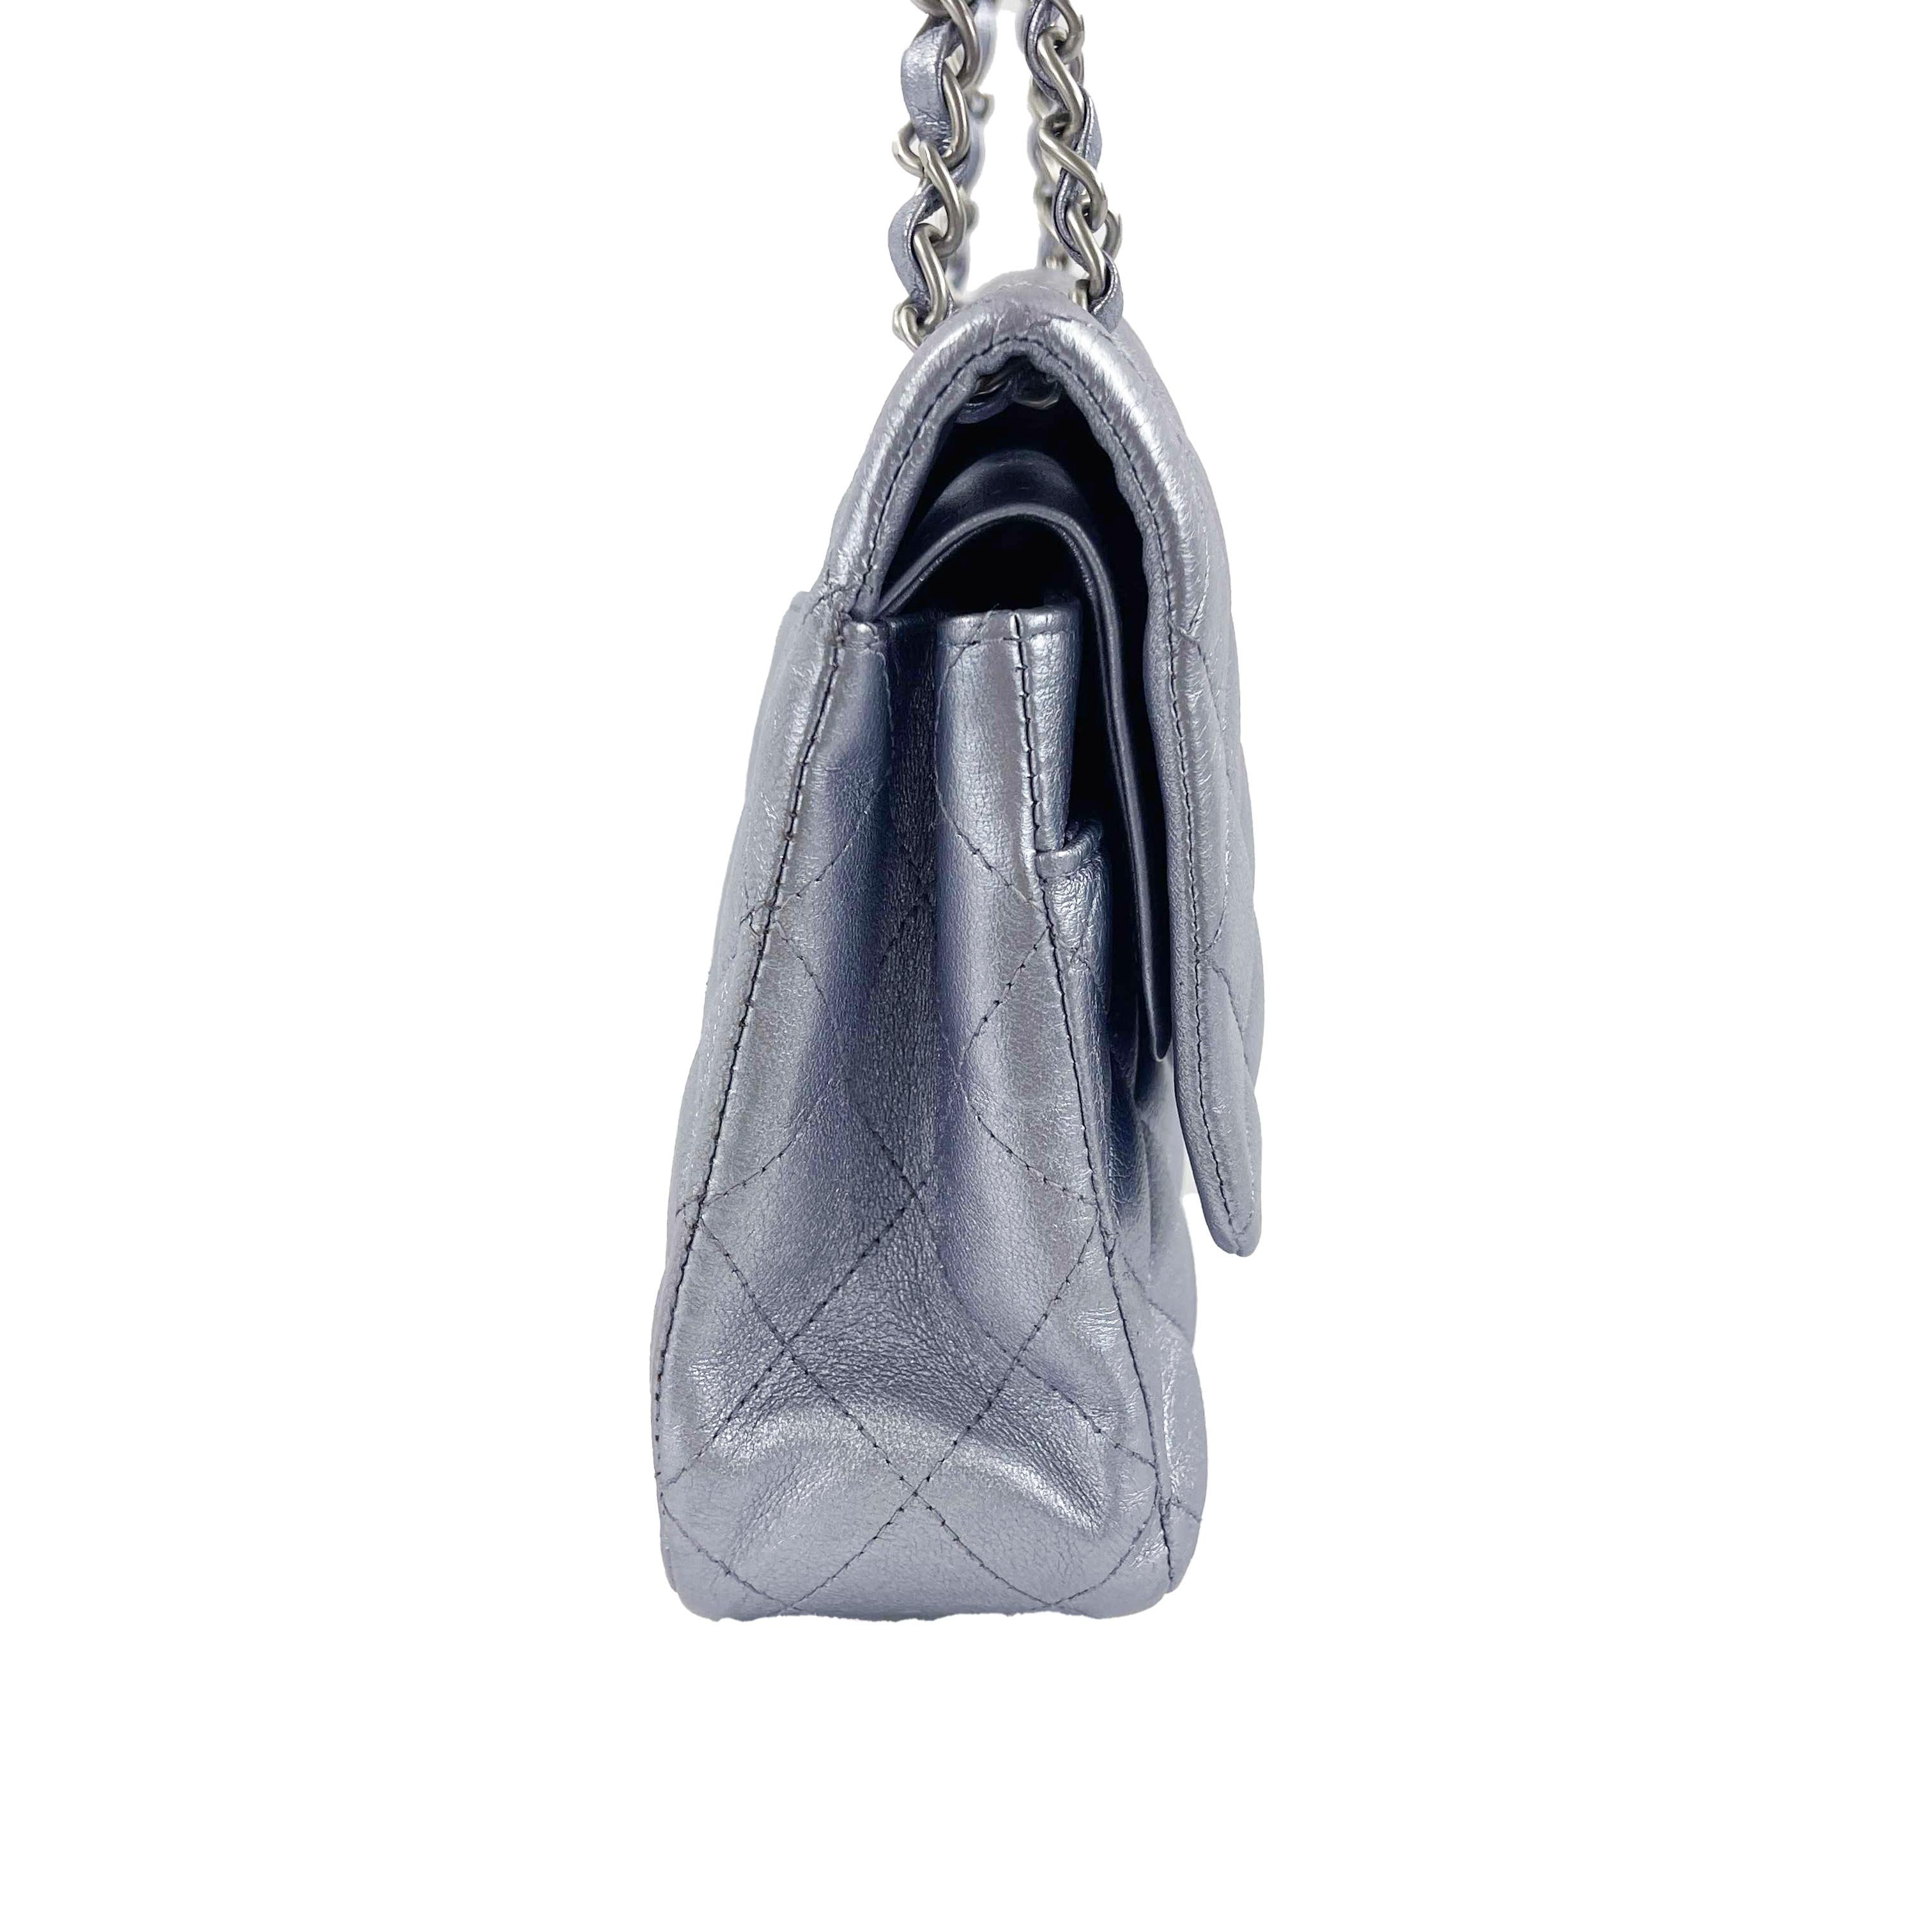 CHANEL - Classic Double Flap Metallic Silver CC Medium Leather Shoulder Bag 4